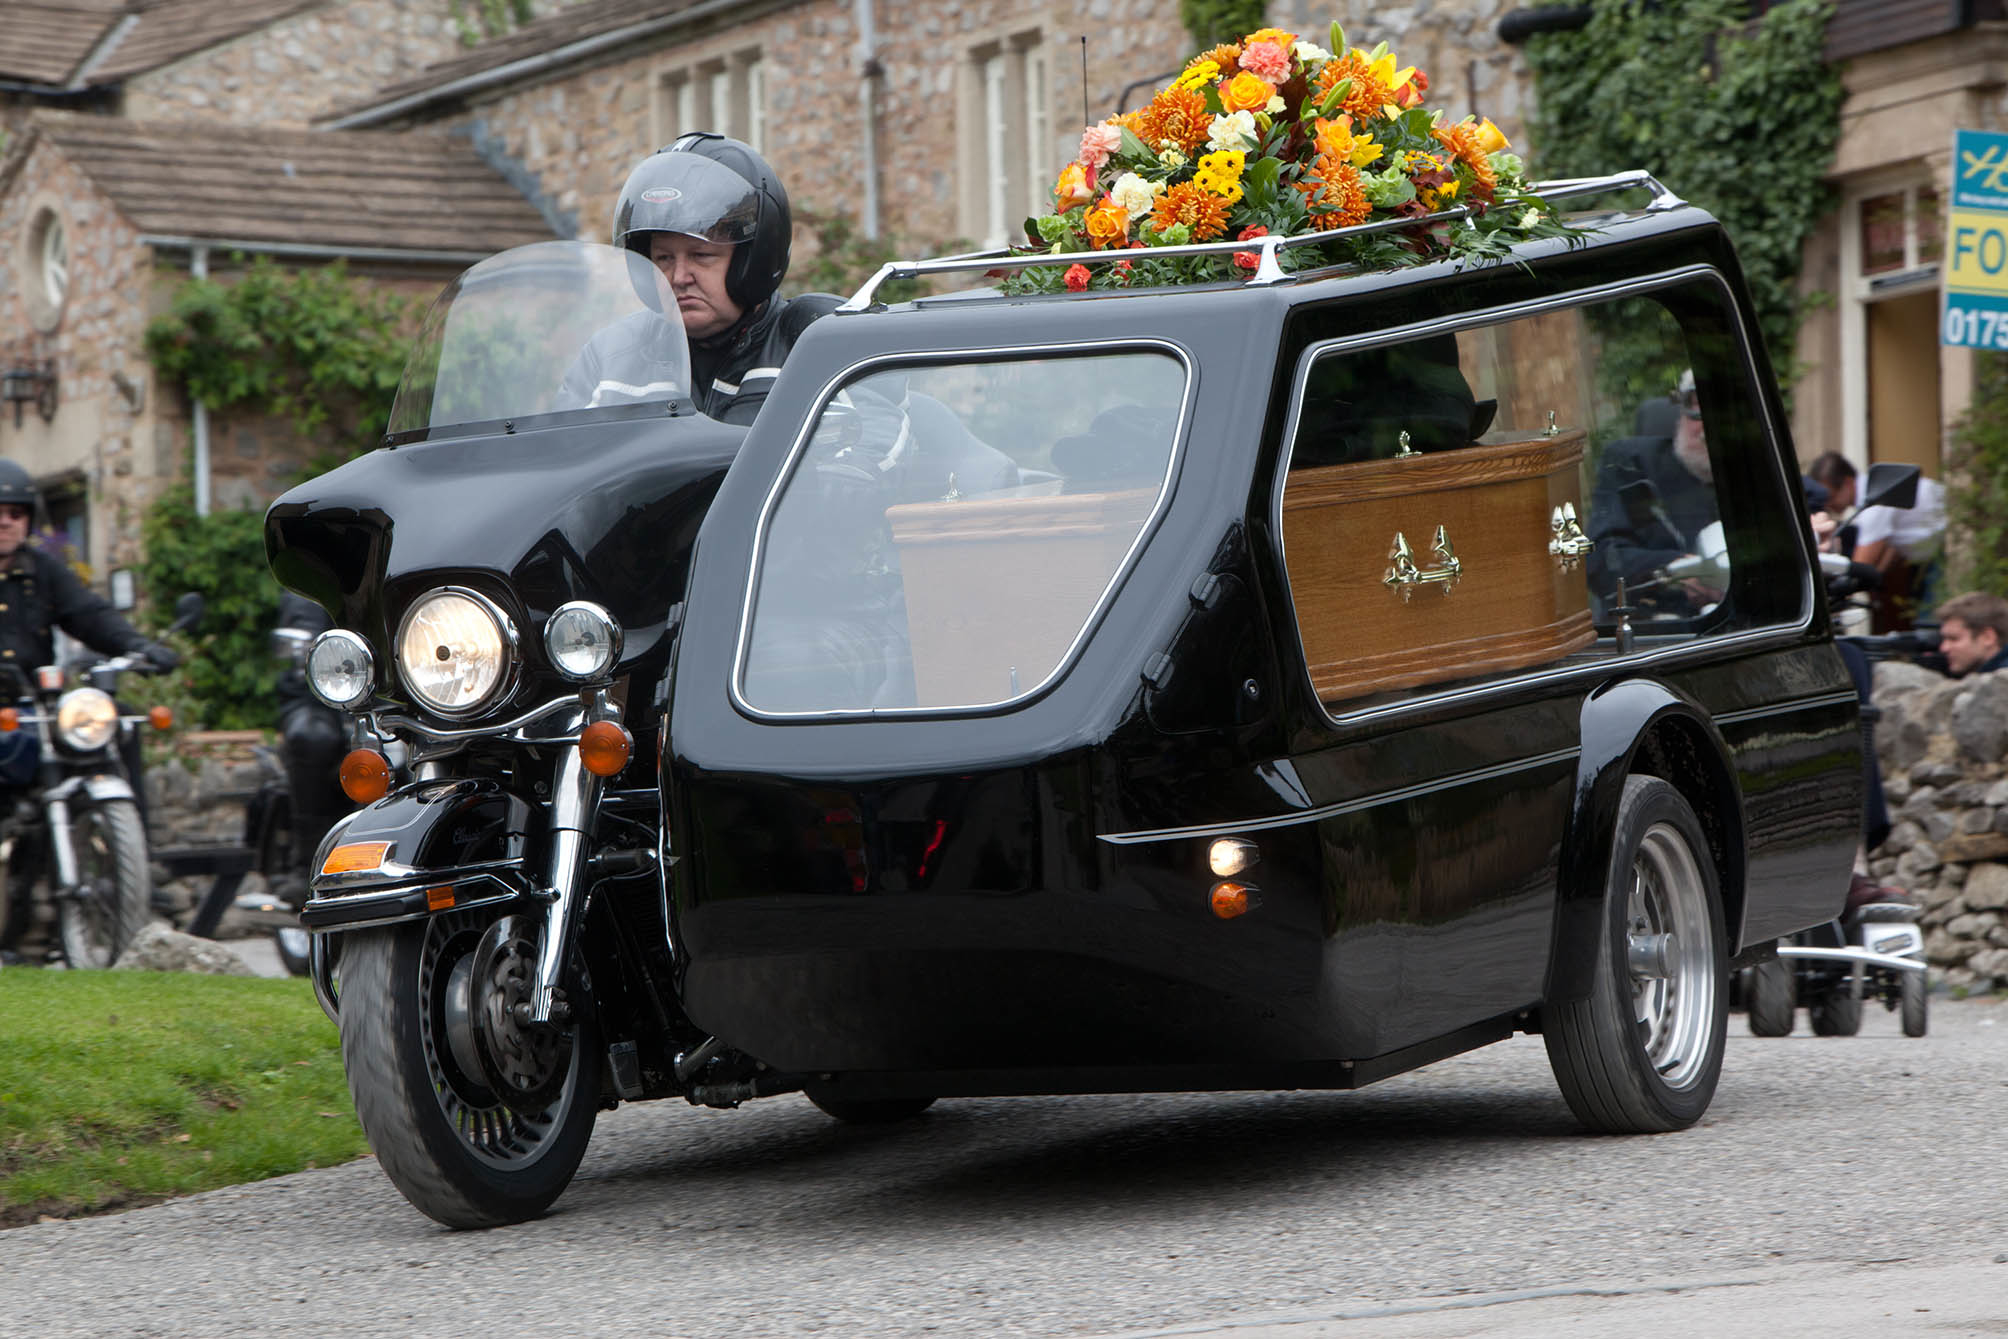 The funeral of Alan Turner on Emmerdale 30th October 2013